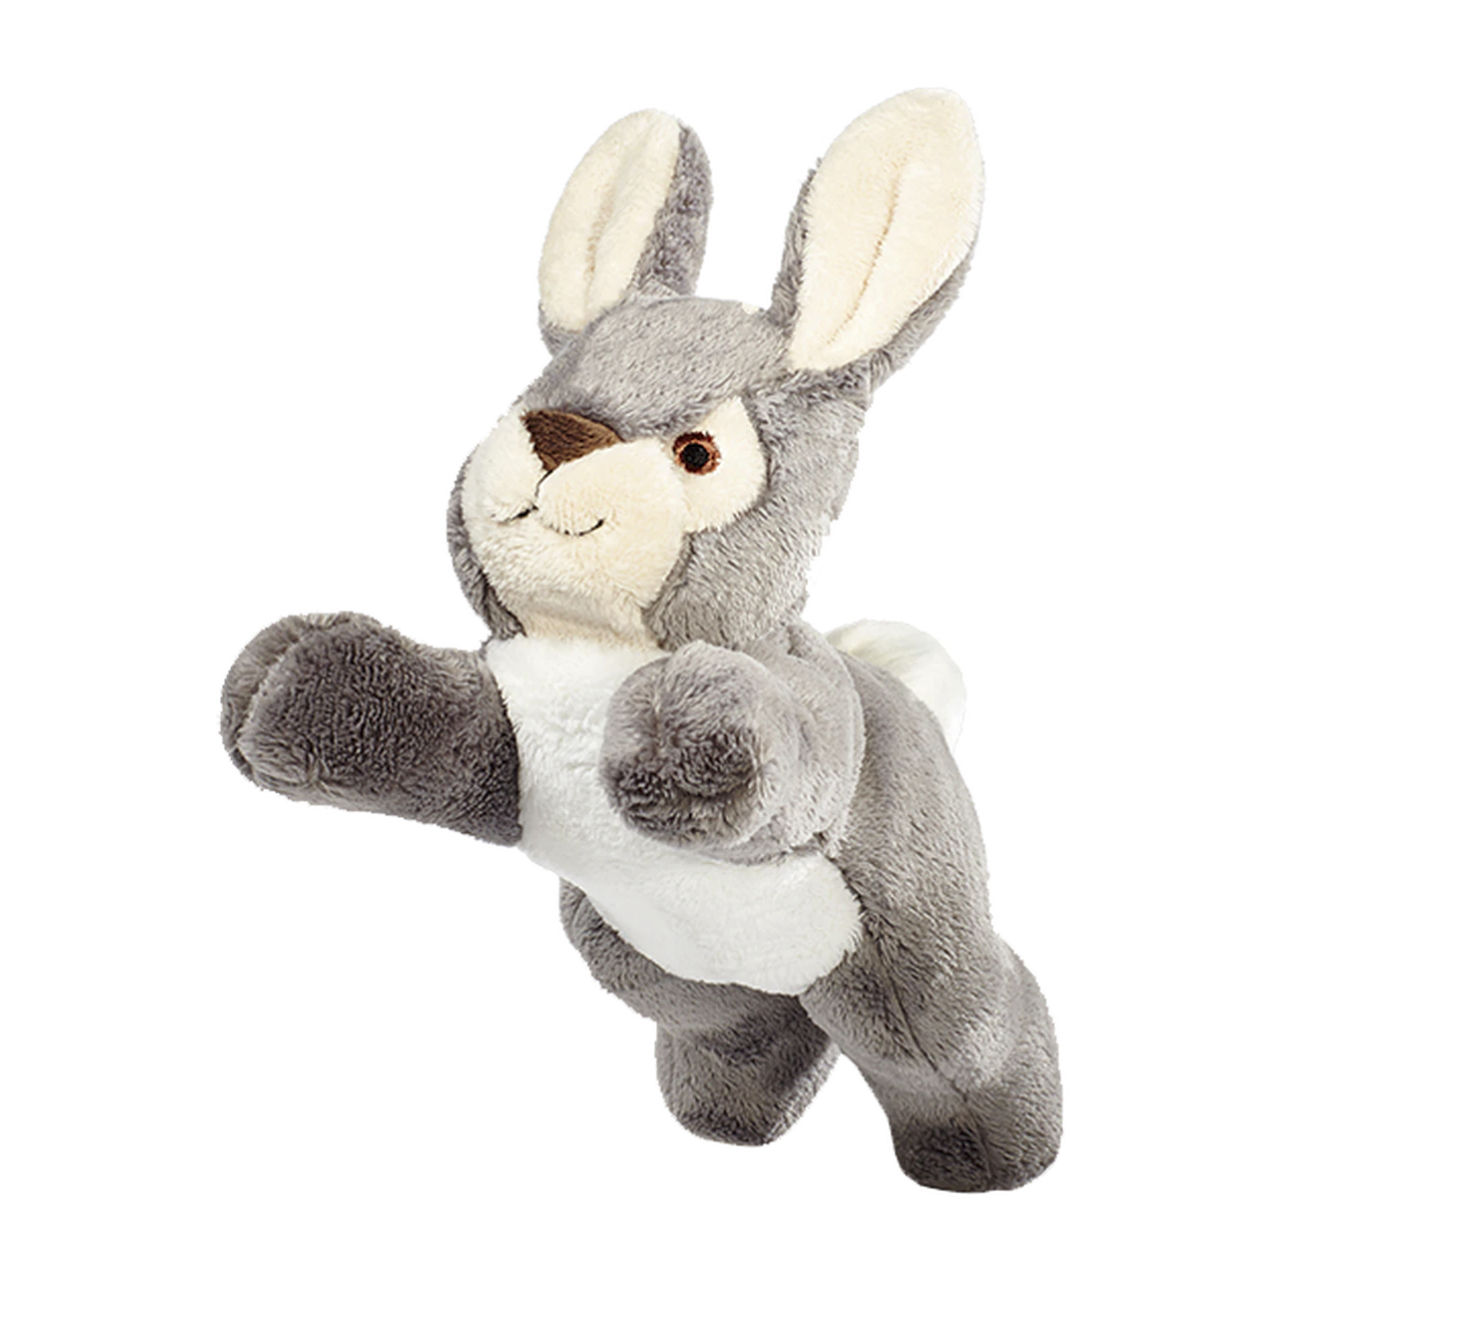 Fluff & Tuff - Jessica - The little Rabbit